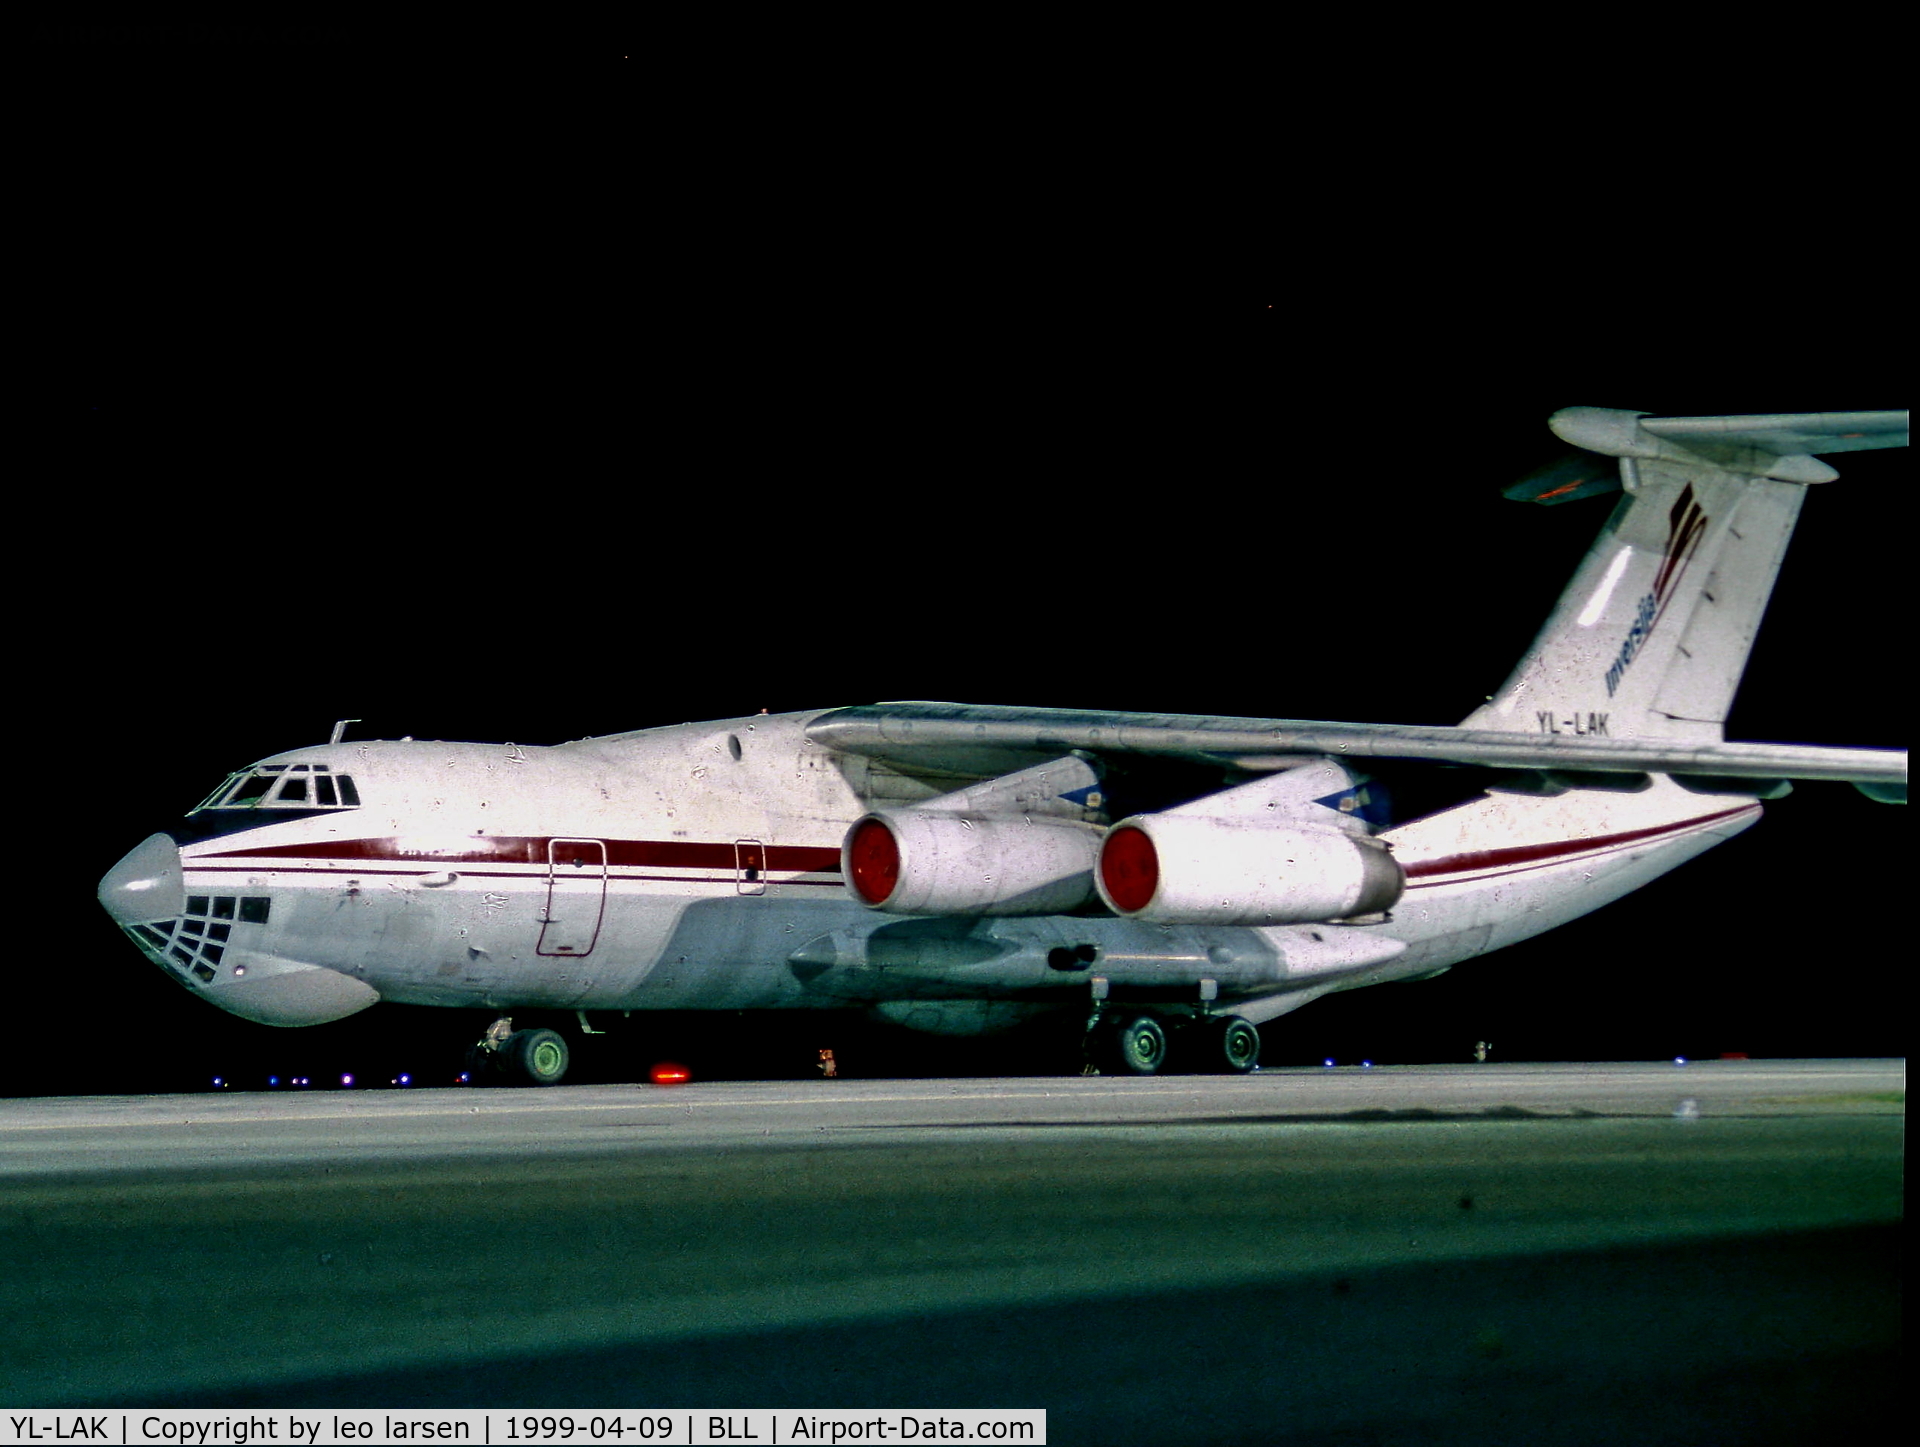 YL-LAK, 1983 Ilyushin Il-76T C/N 0003424707, Billund Denmark 9.4.99